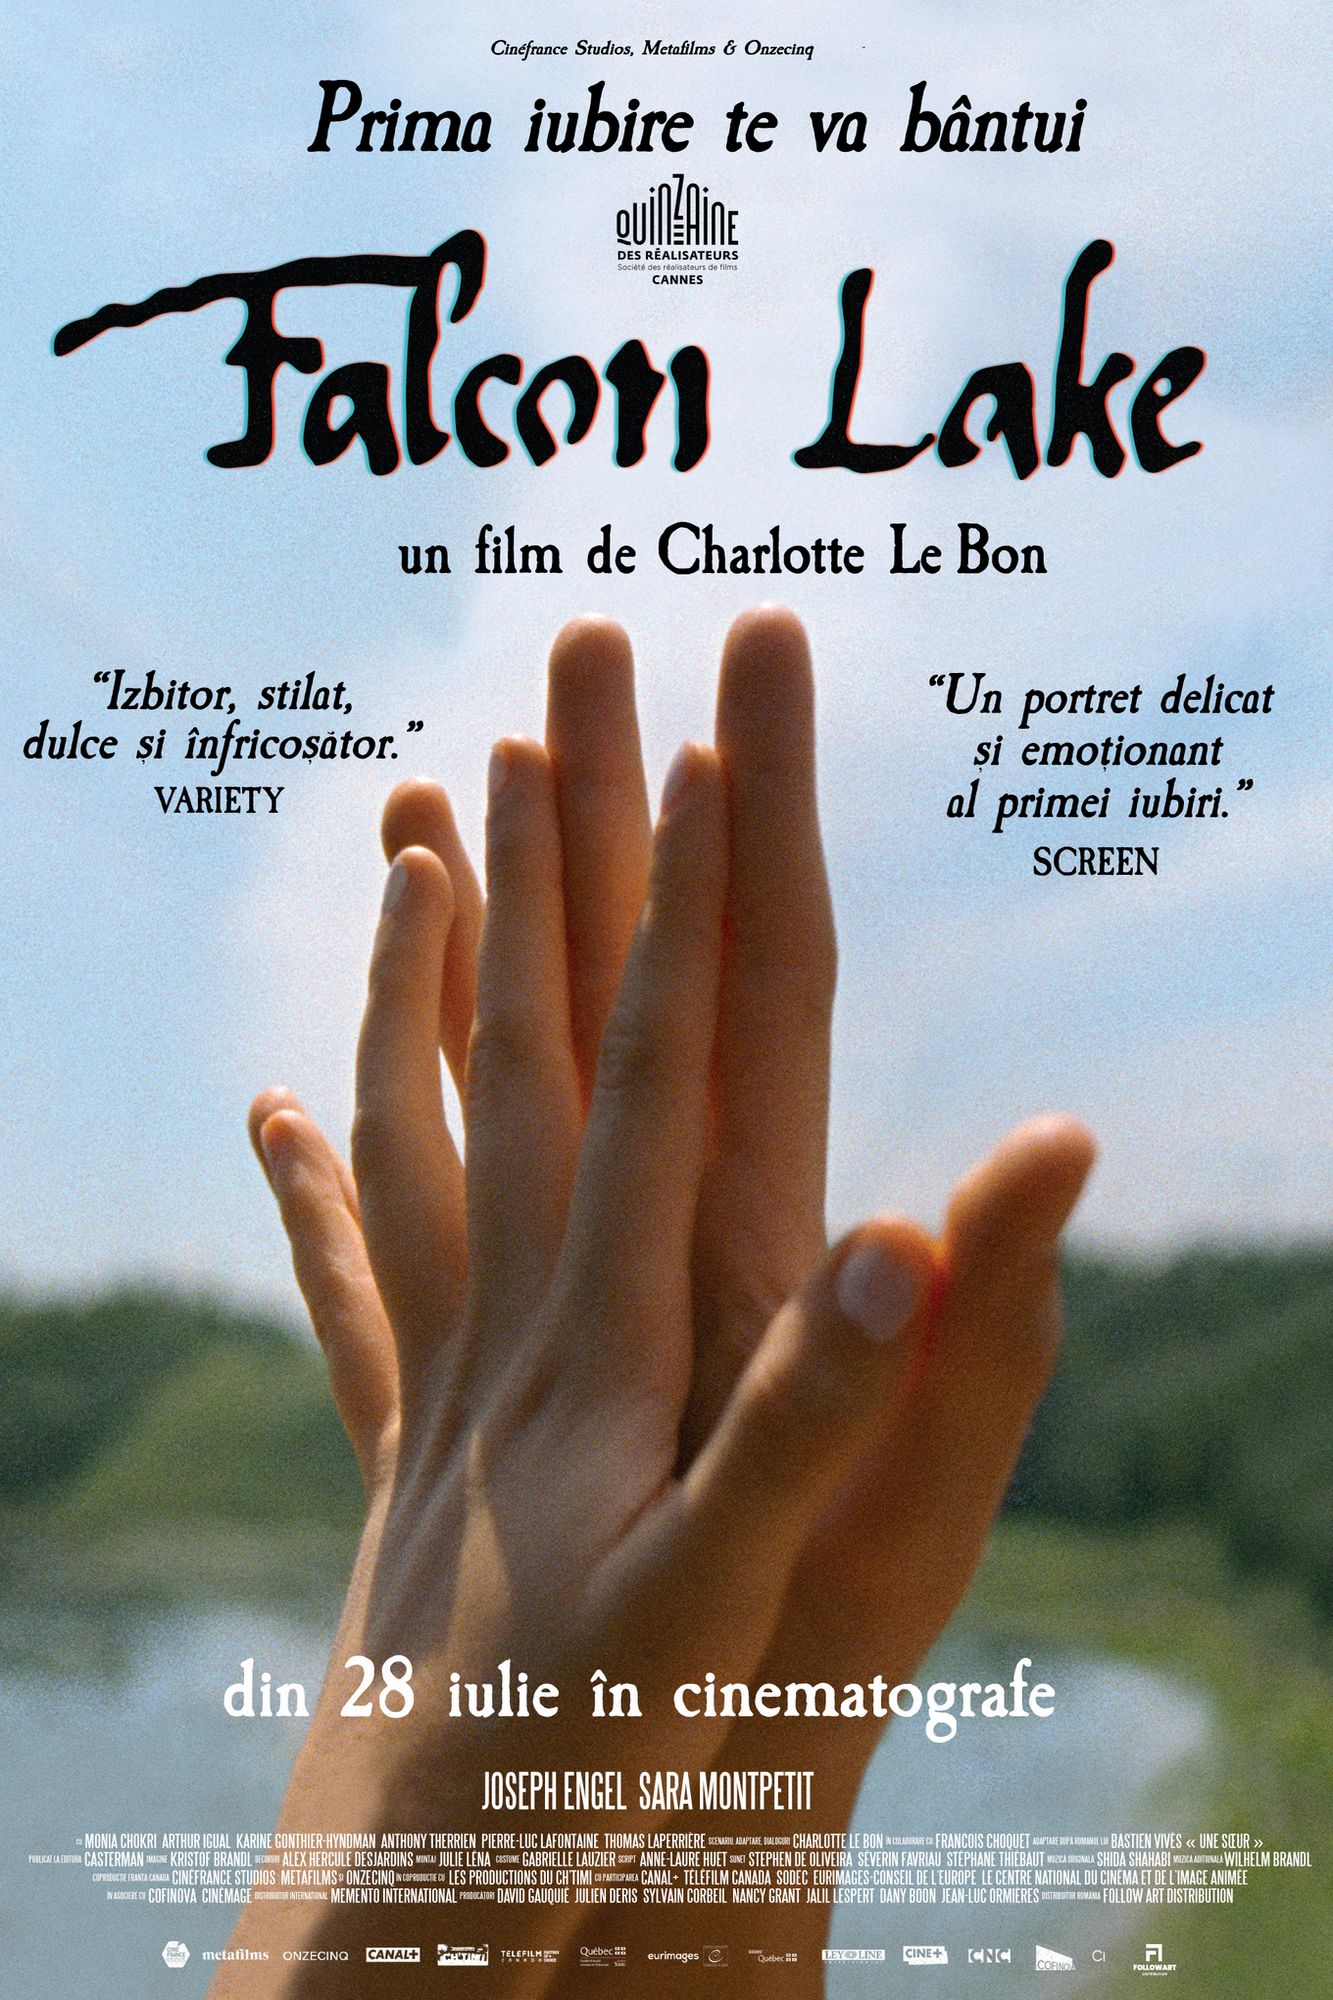 Falcon Lake poster Romania